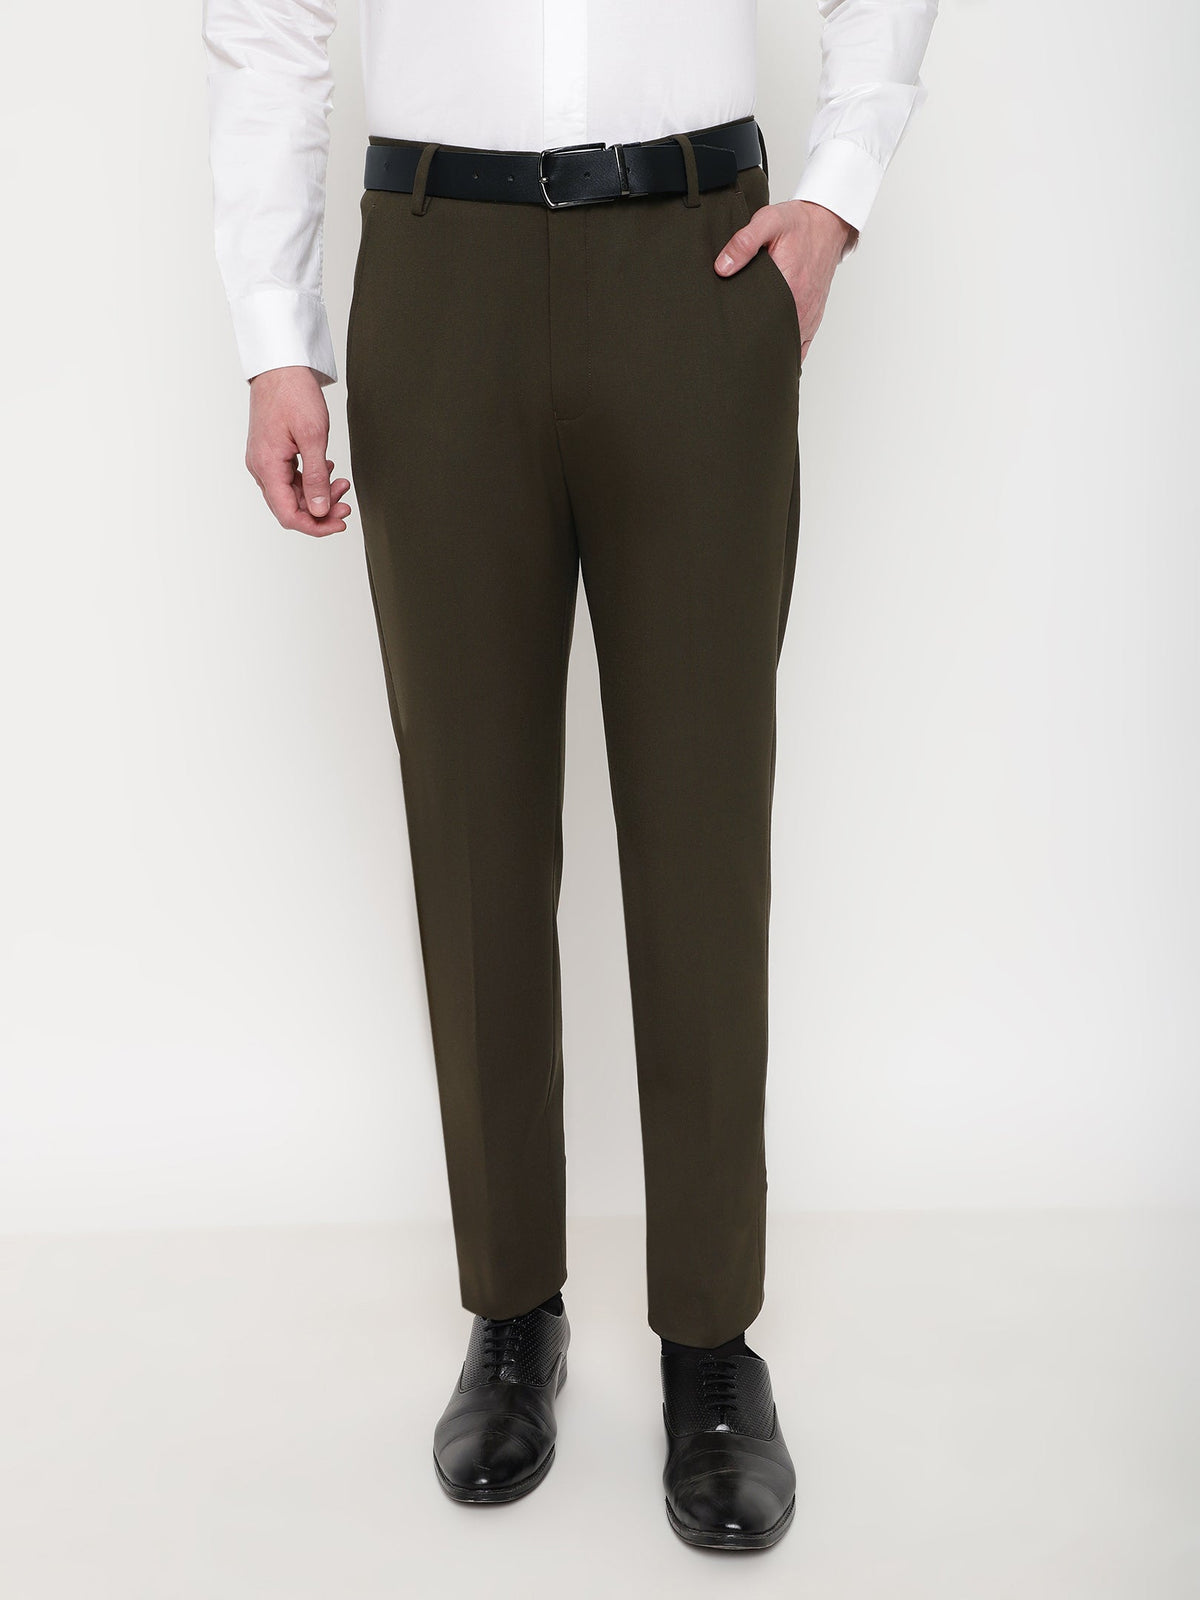 Flex Waist 4-Way Stretch Formal Trousers in Jade Olive- Slim Fit